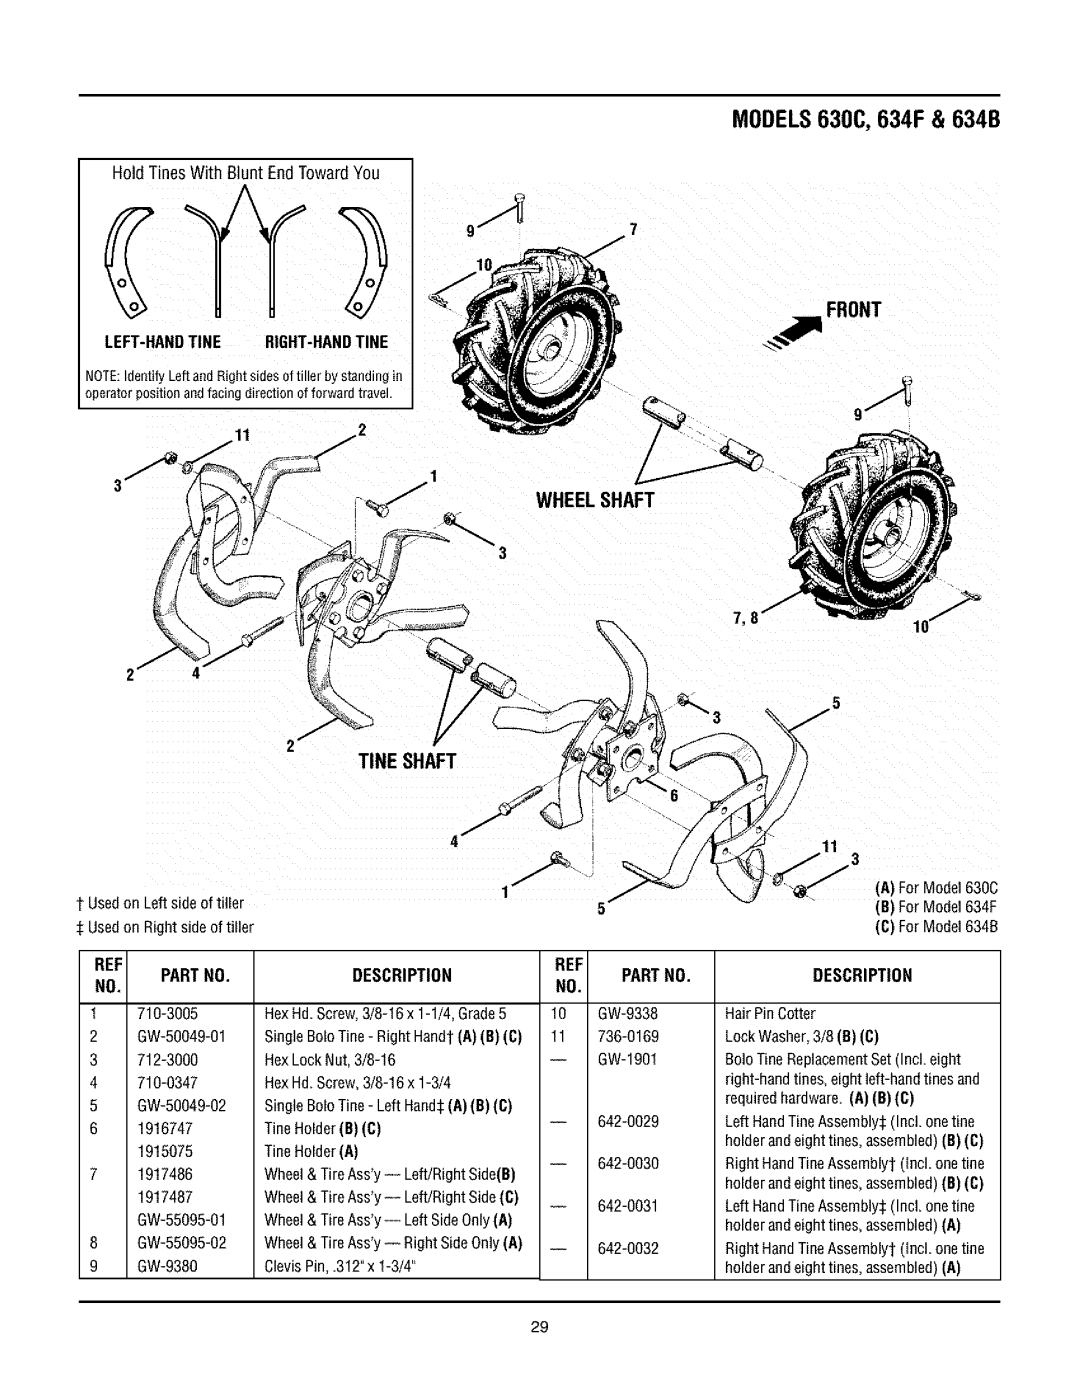 Troy-Bilt 630CN manual Wheelshaft, Tine Shaft, Left-Handtine Right-Handtine, MODELS630C, 634F & 634B, Partno, Description 